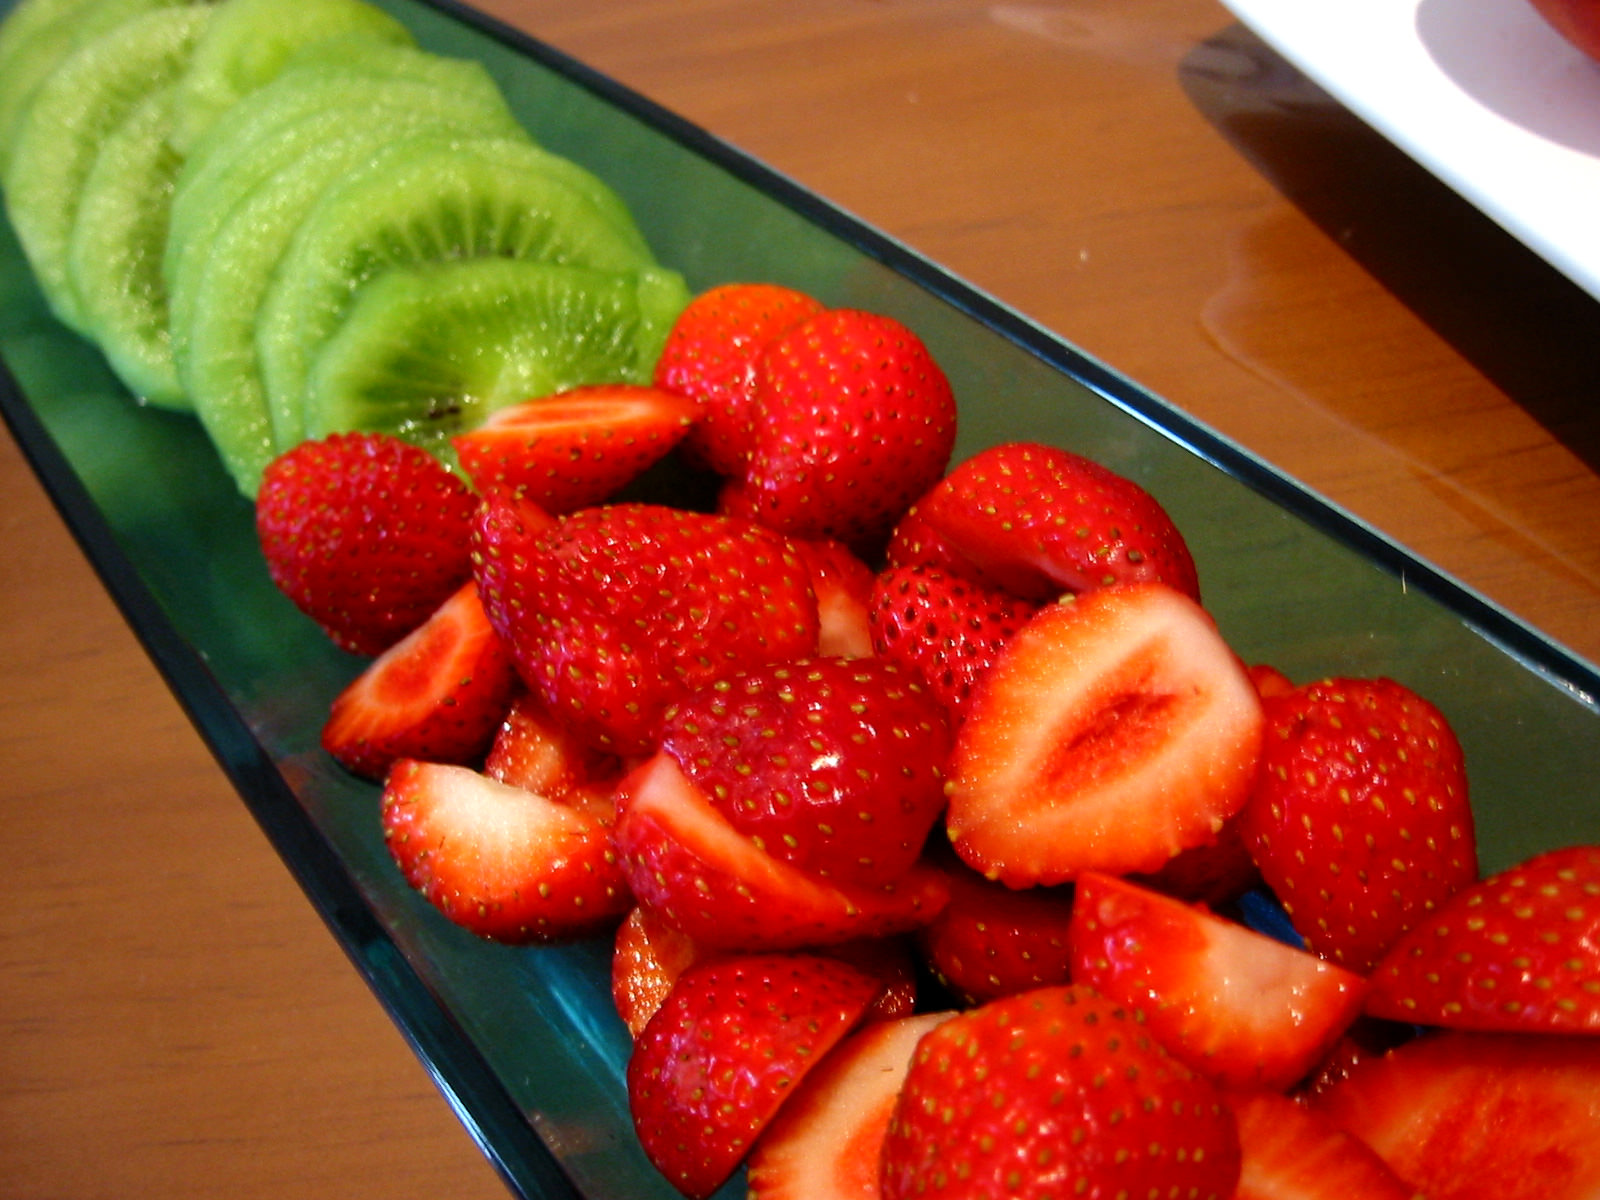 Kiwi fruit and strawberries